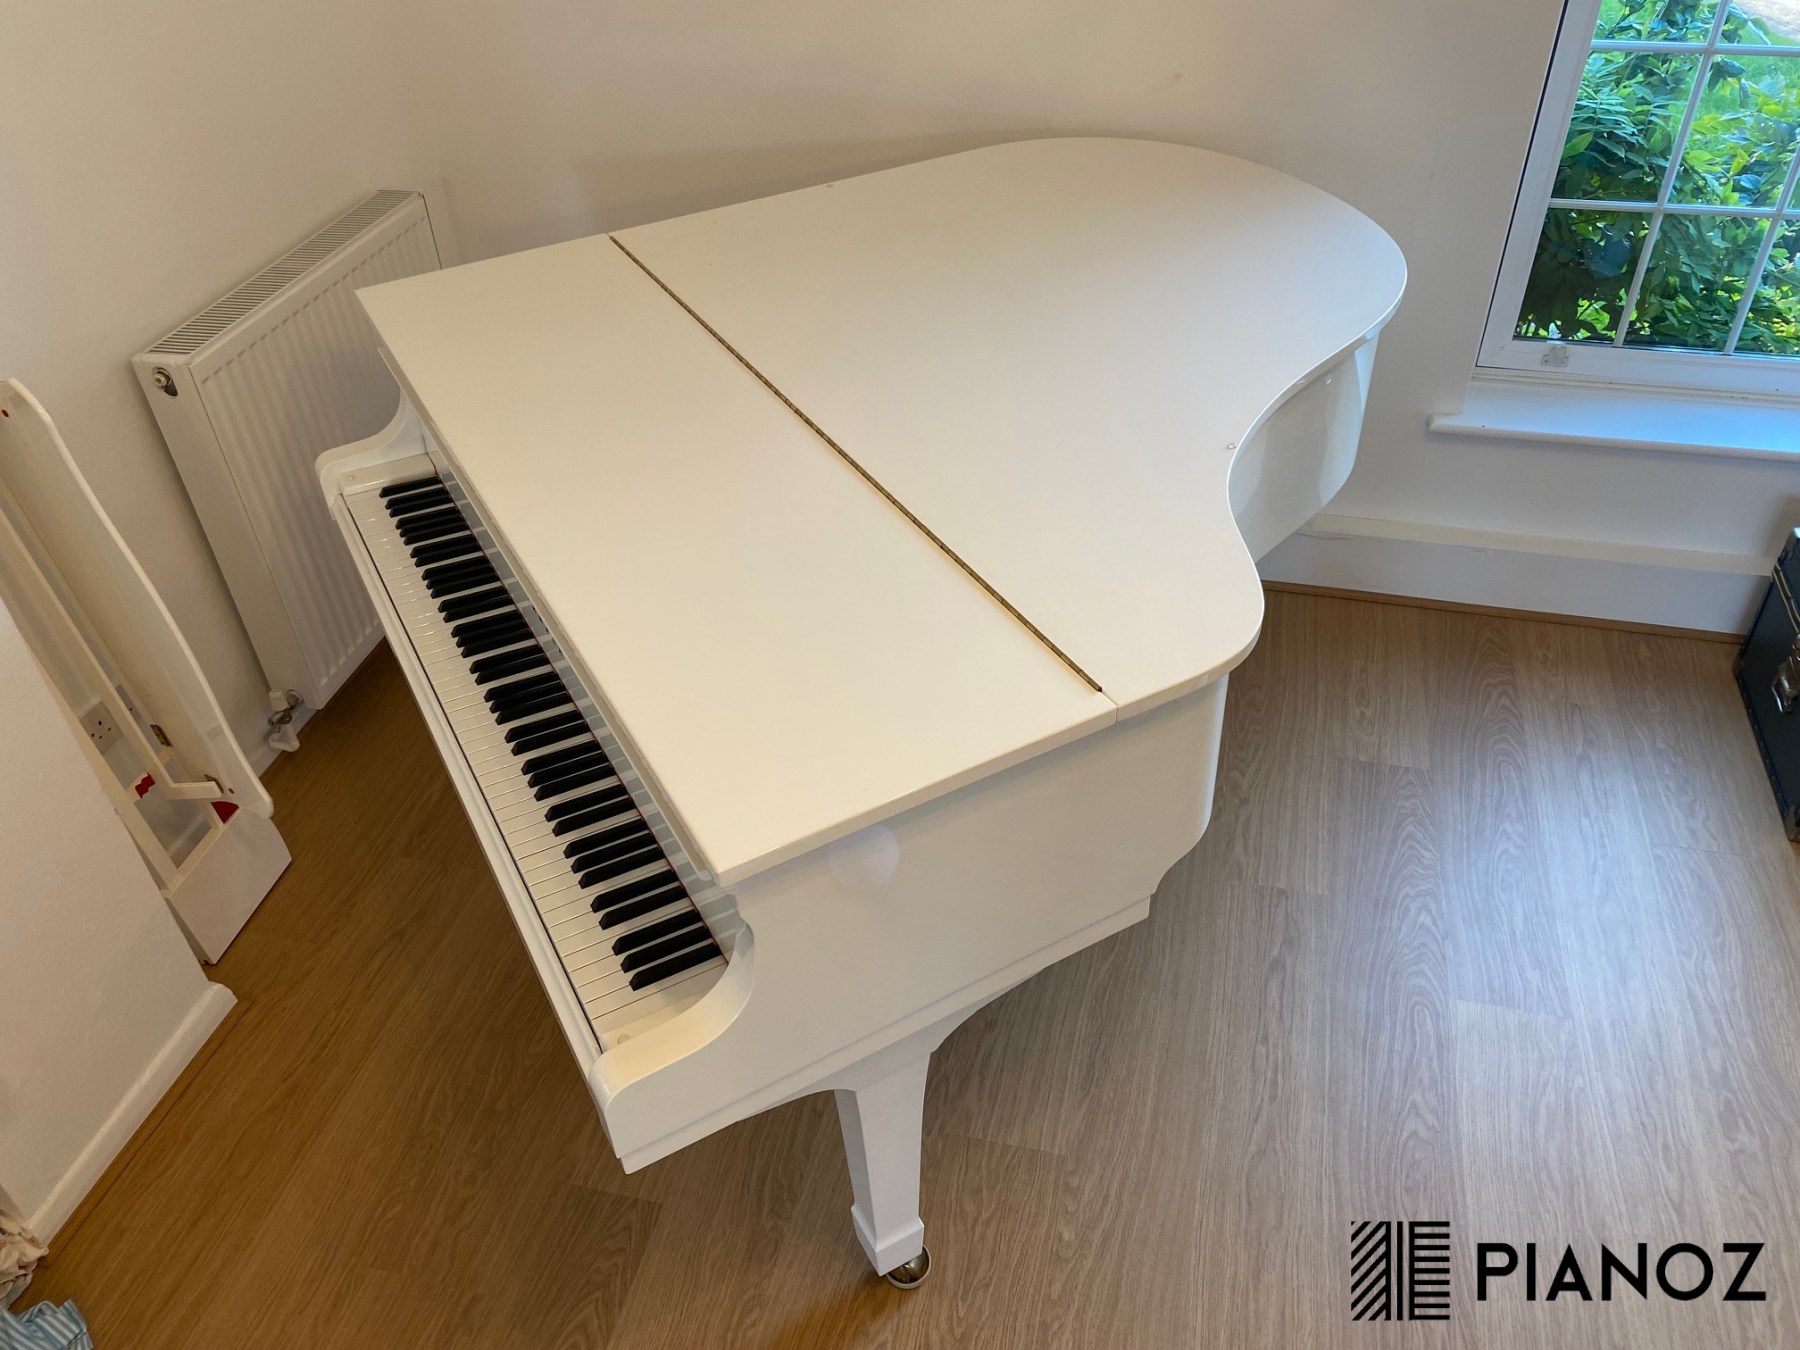 Yamaha G2 Japanese White Baby Grand Piano piano for sale in UK